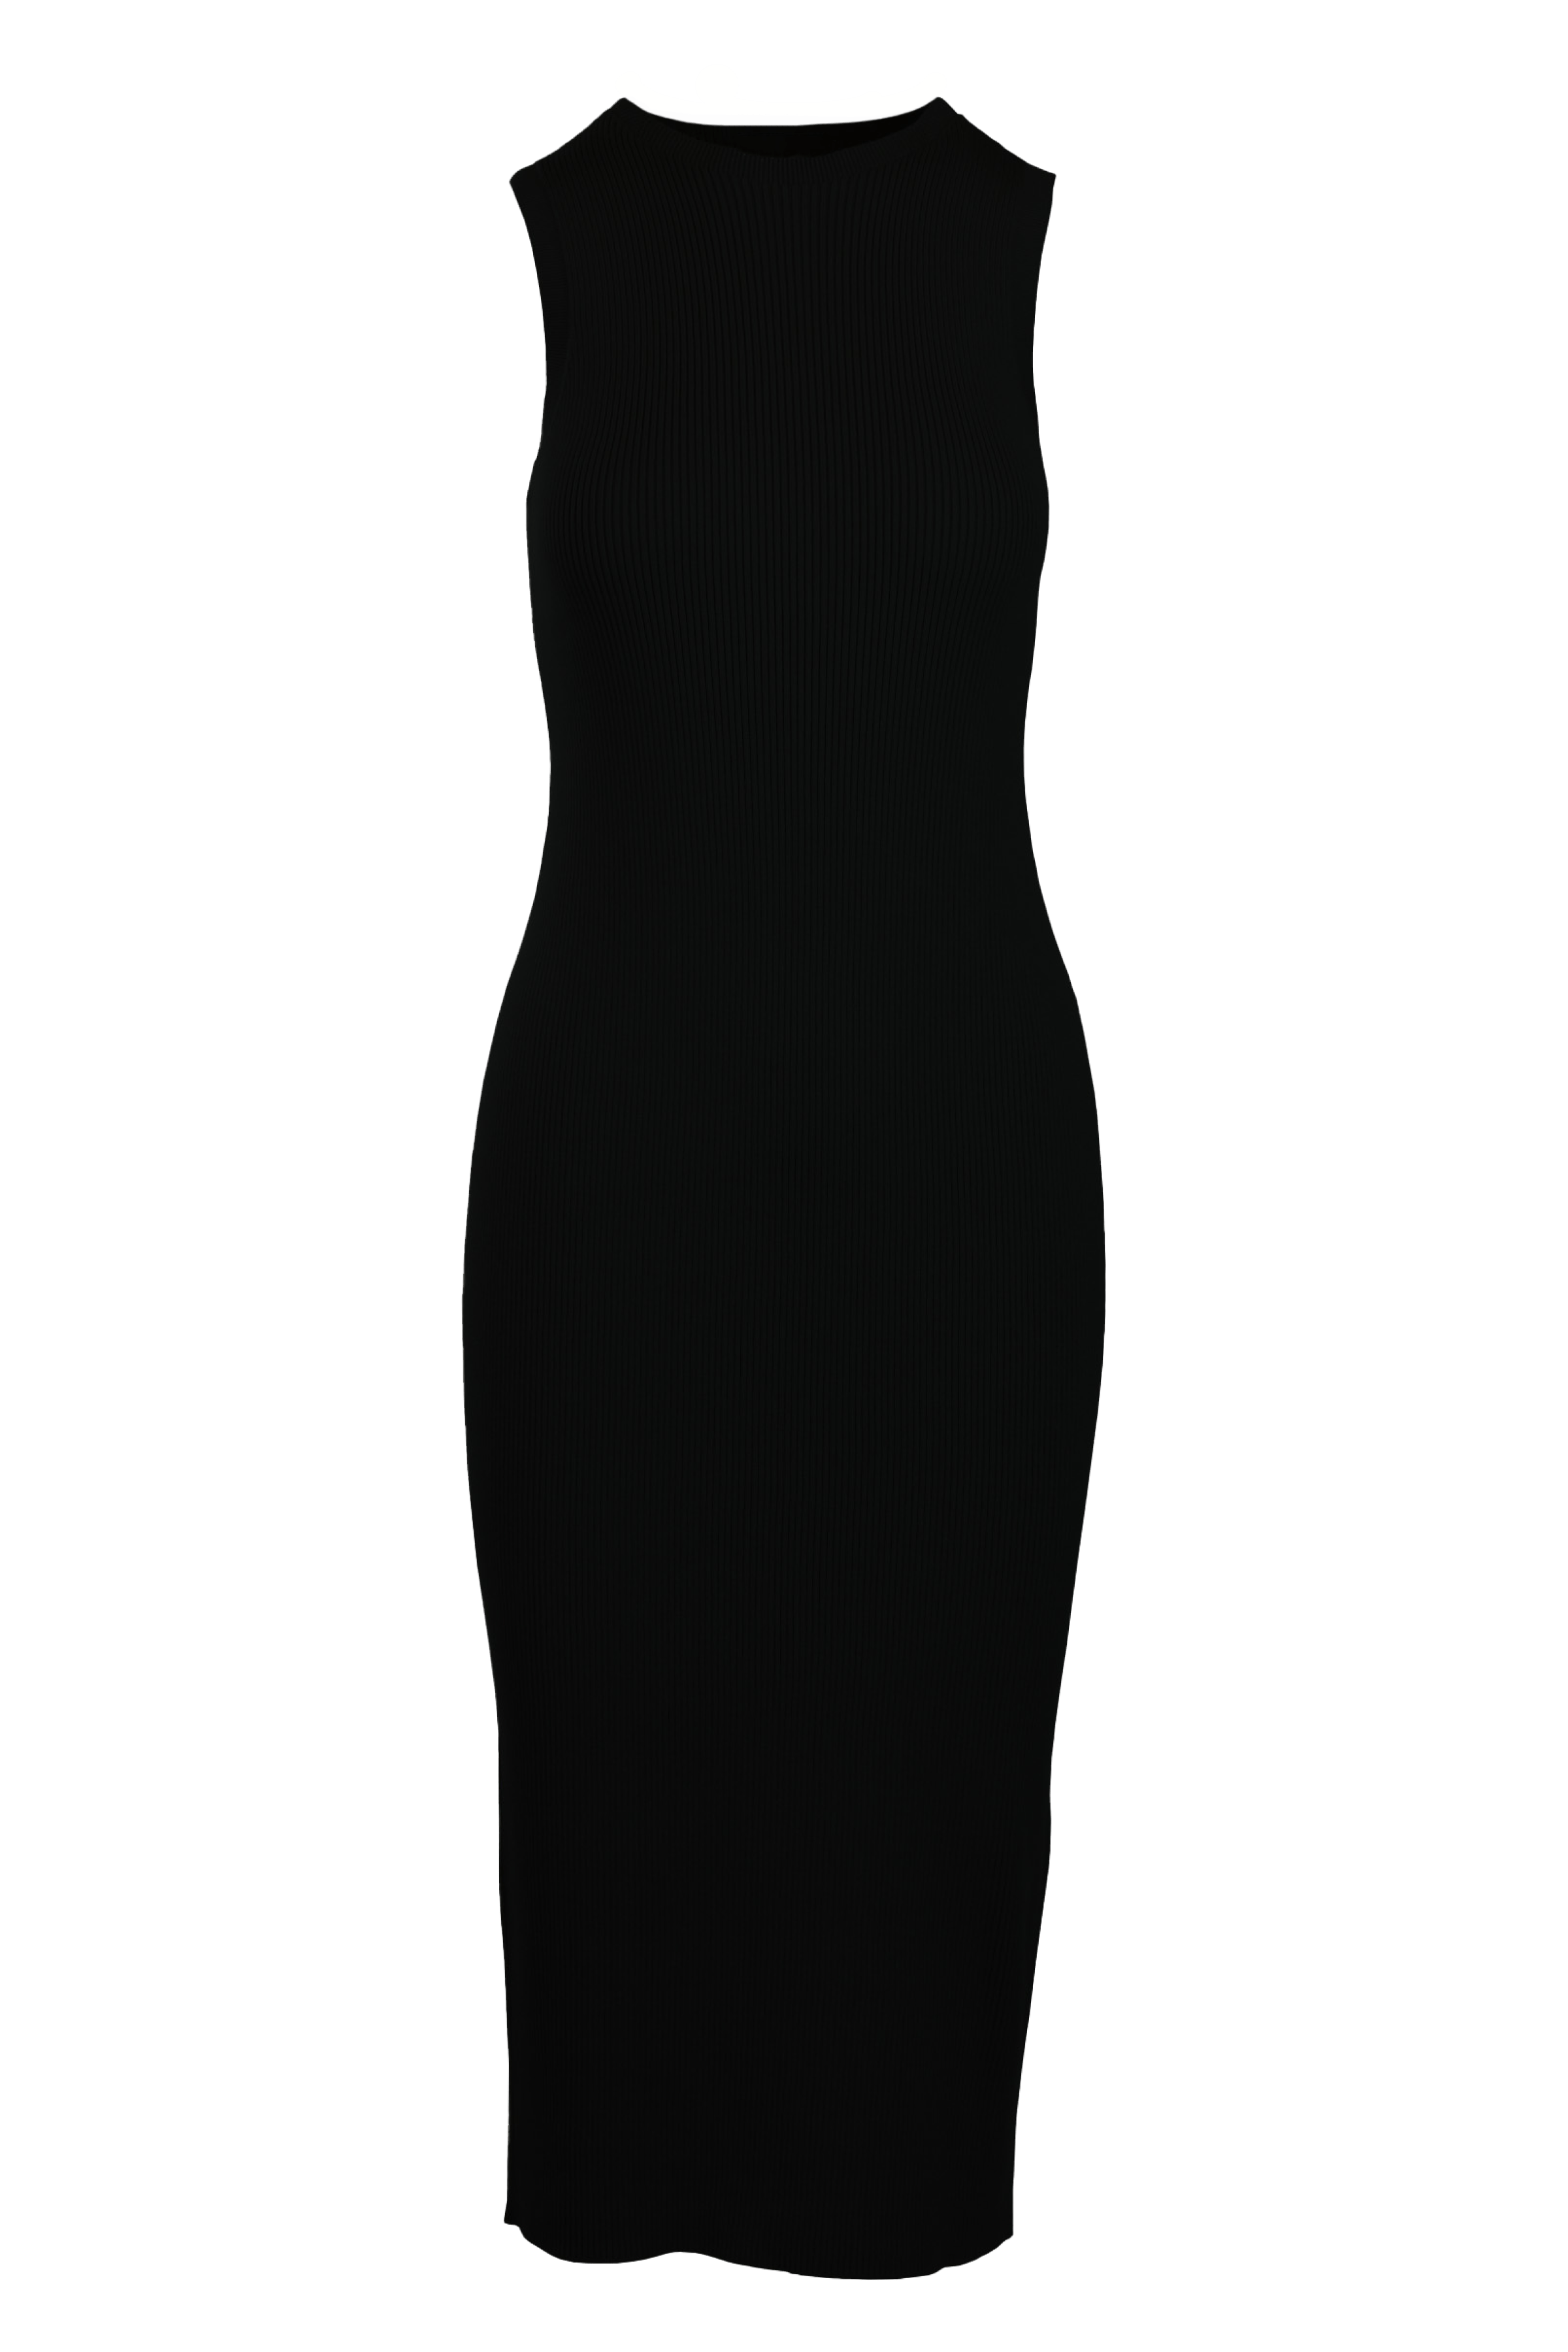 Knot Standard Black Sleeveless Midi Dress by Knot Standard